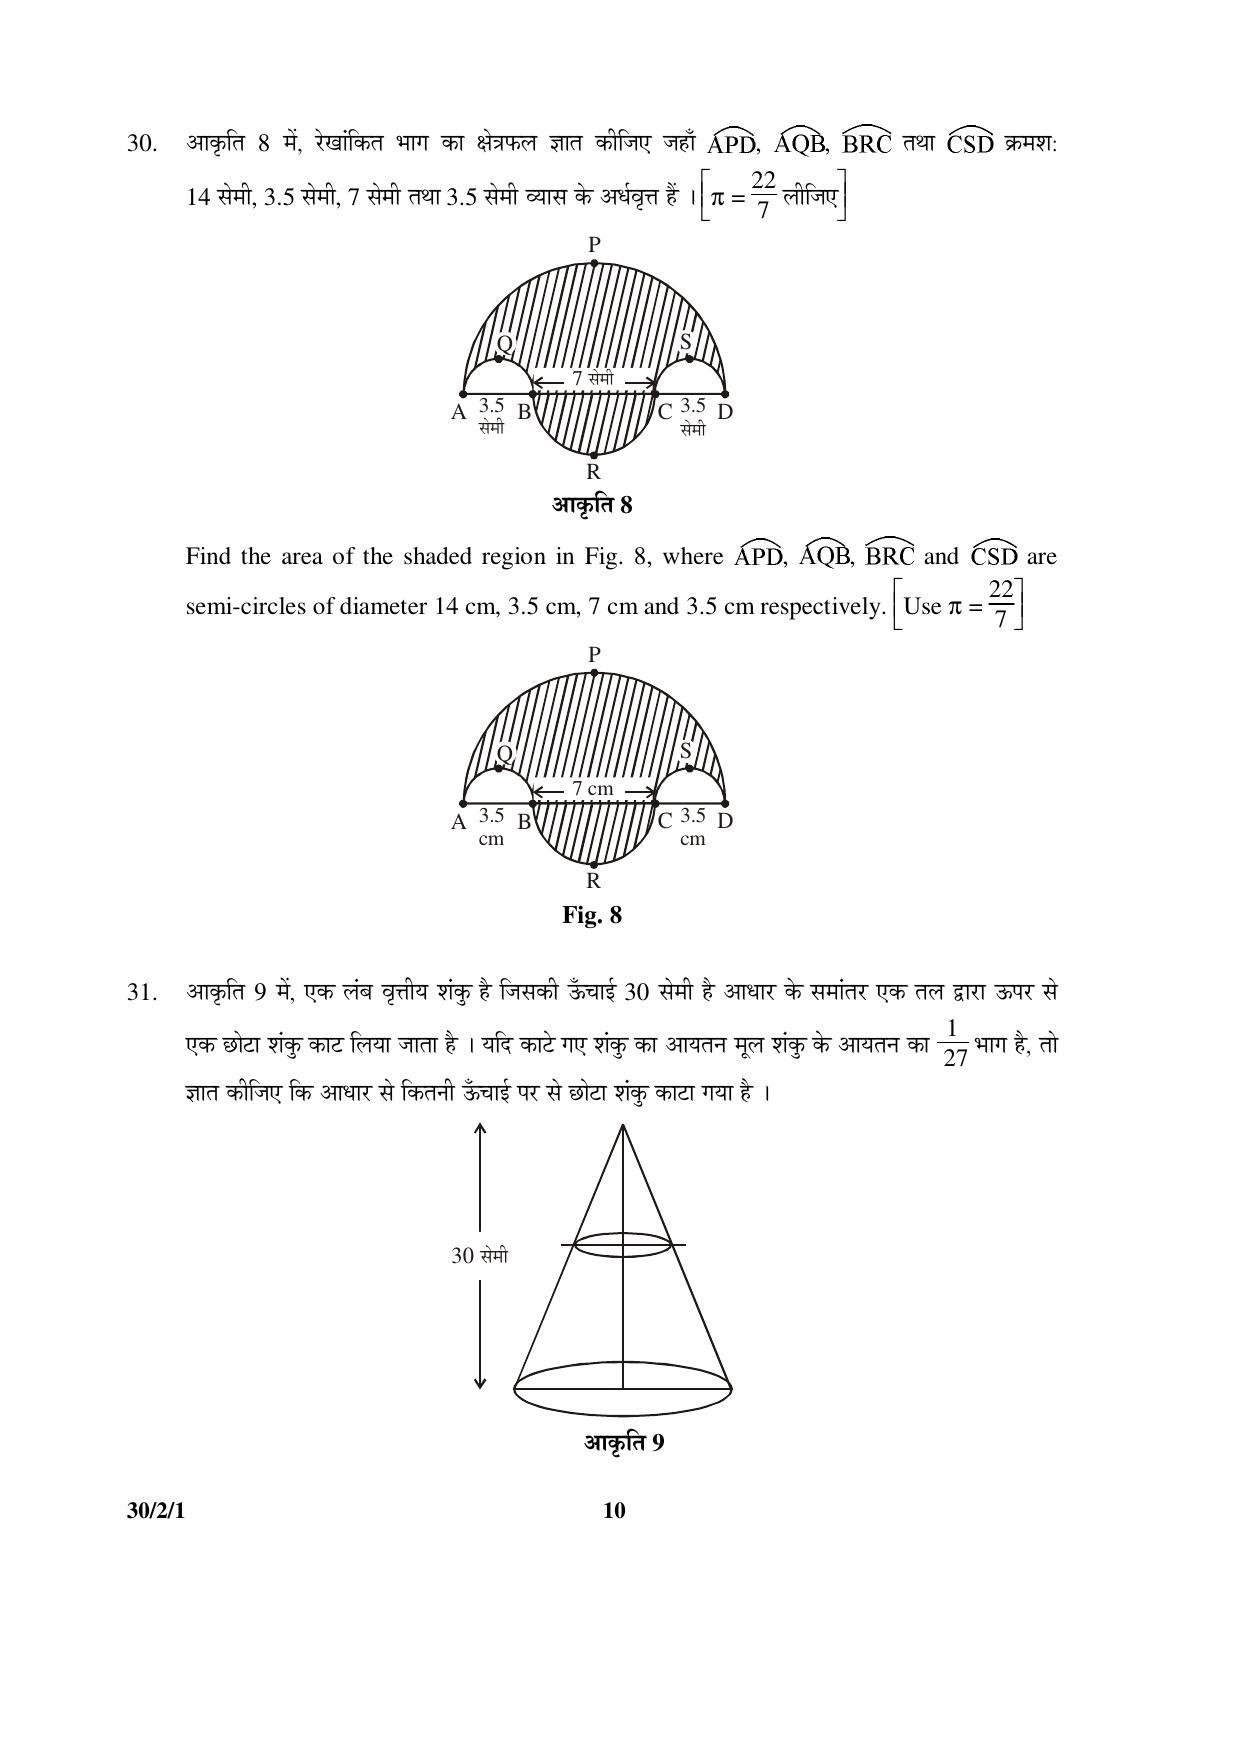 CBSE Class 10 30-2-1 _Mathematics 2016 Question Paper - Page 10